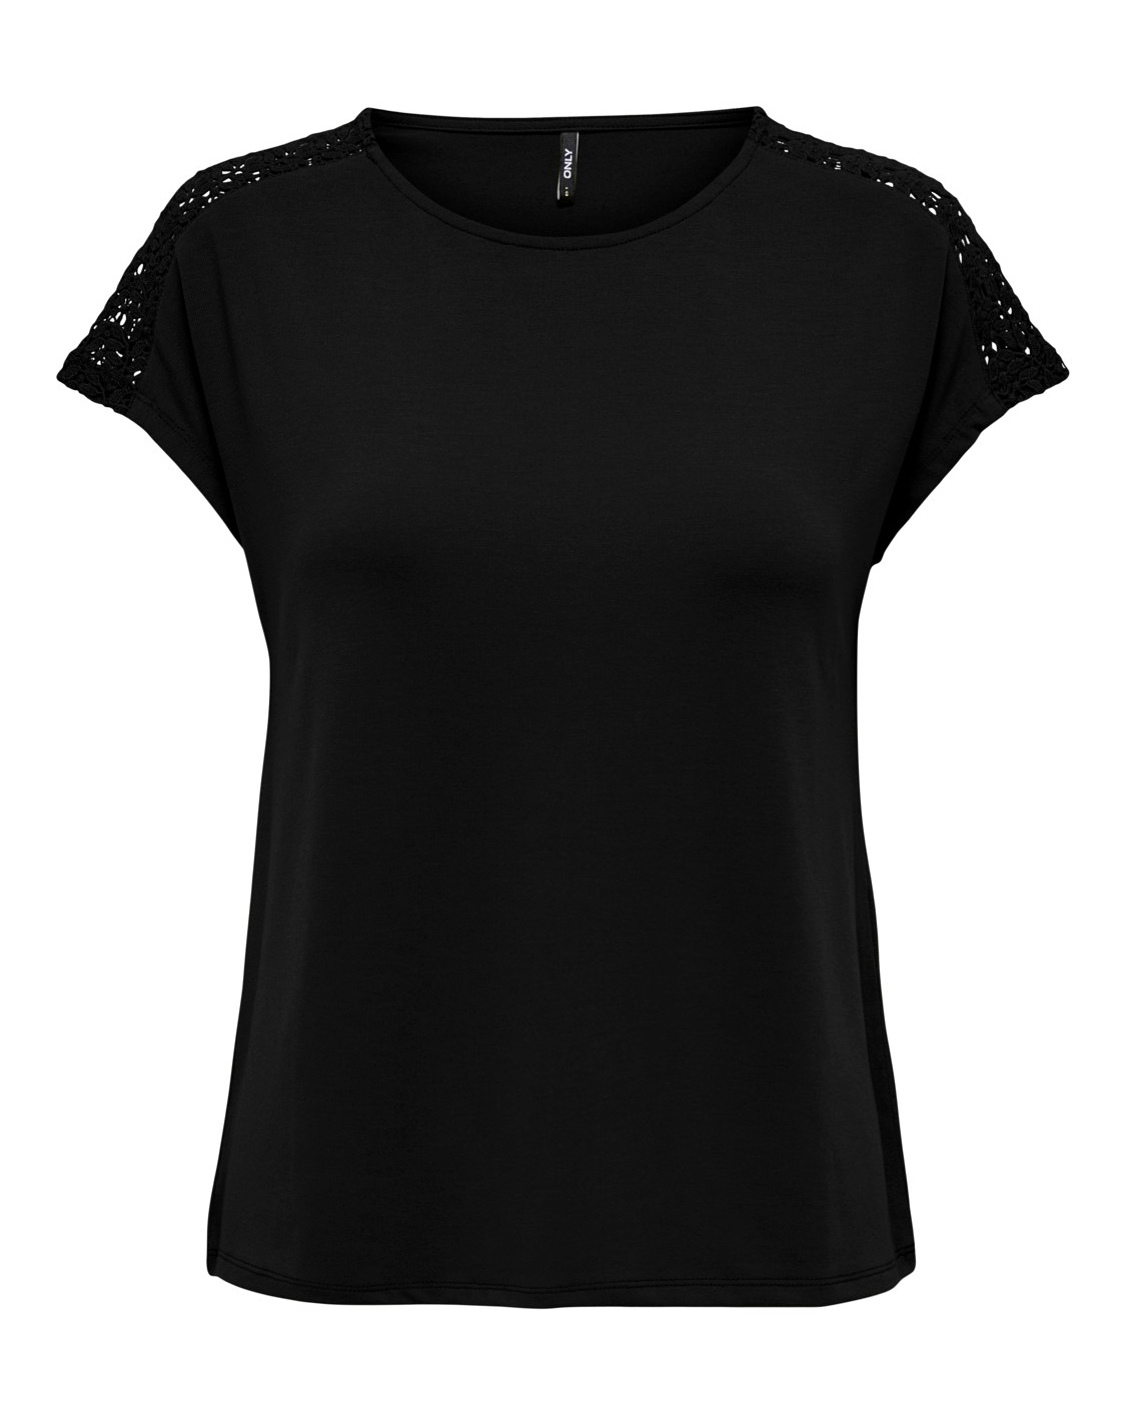 Only camiseta de mujer de m/c Thea 15289589 negra